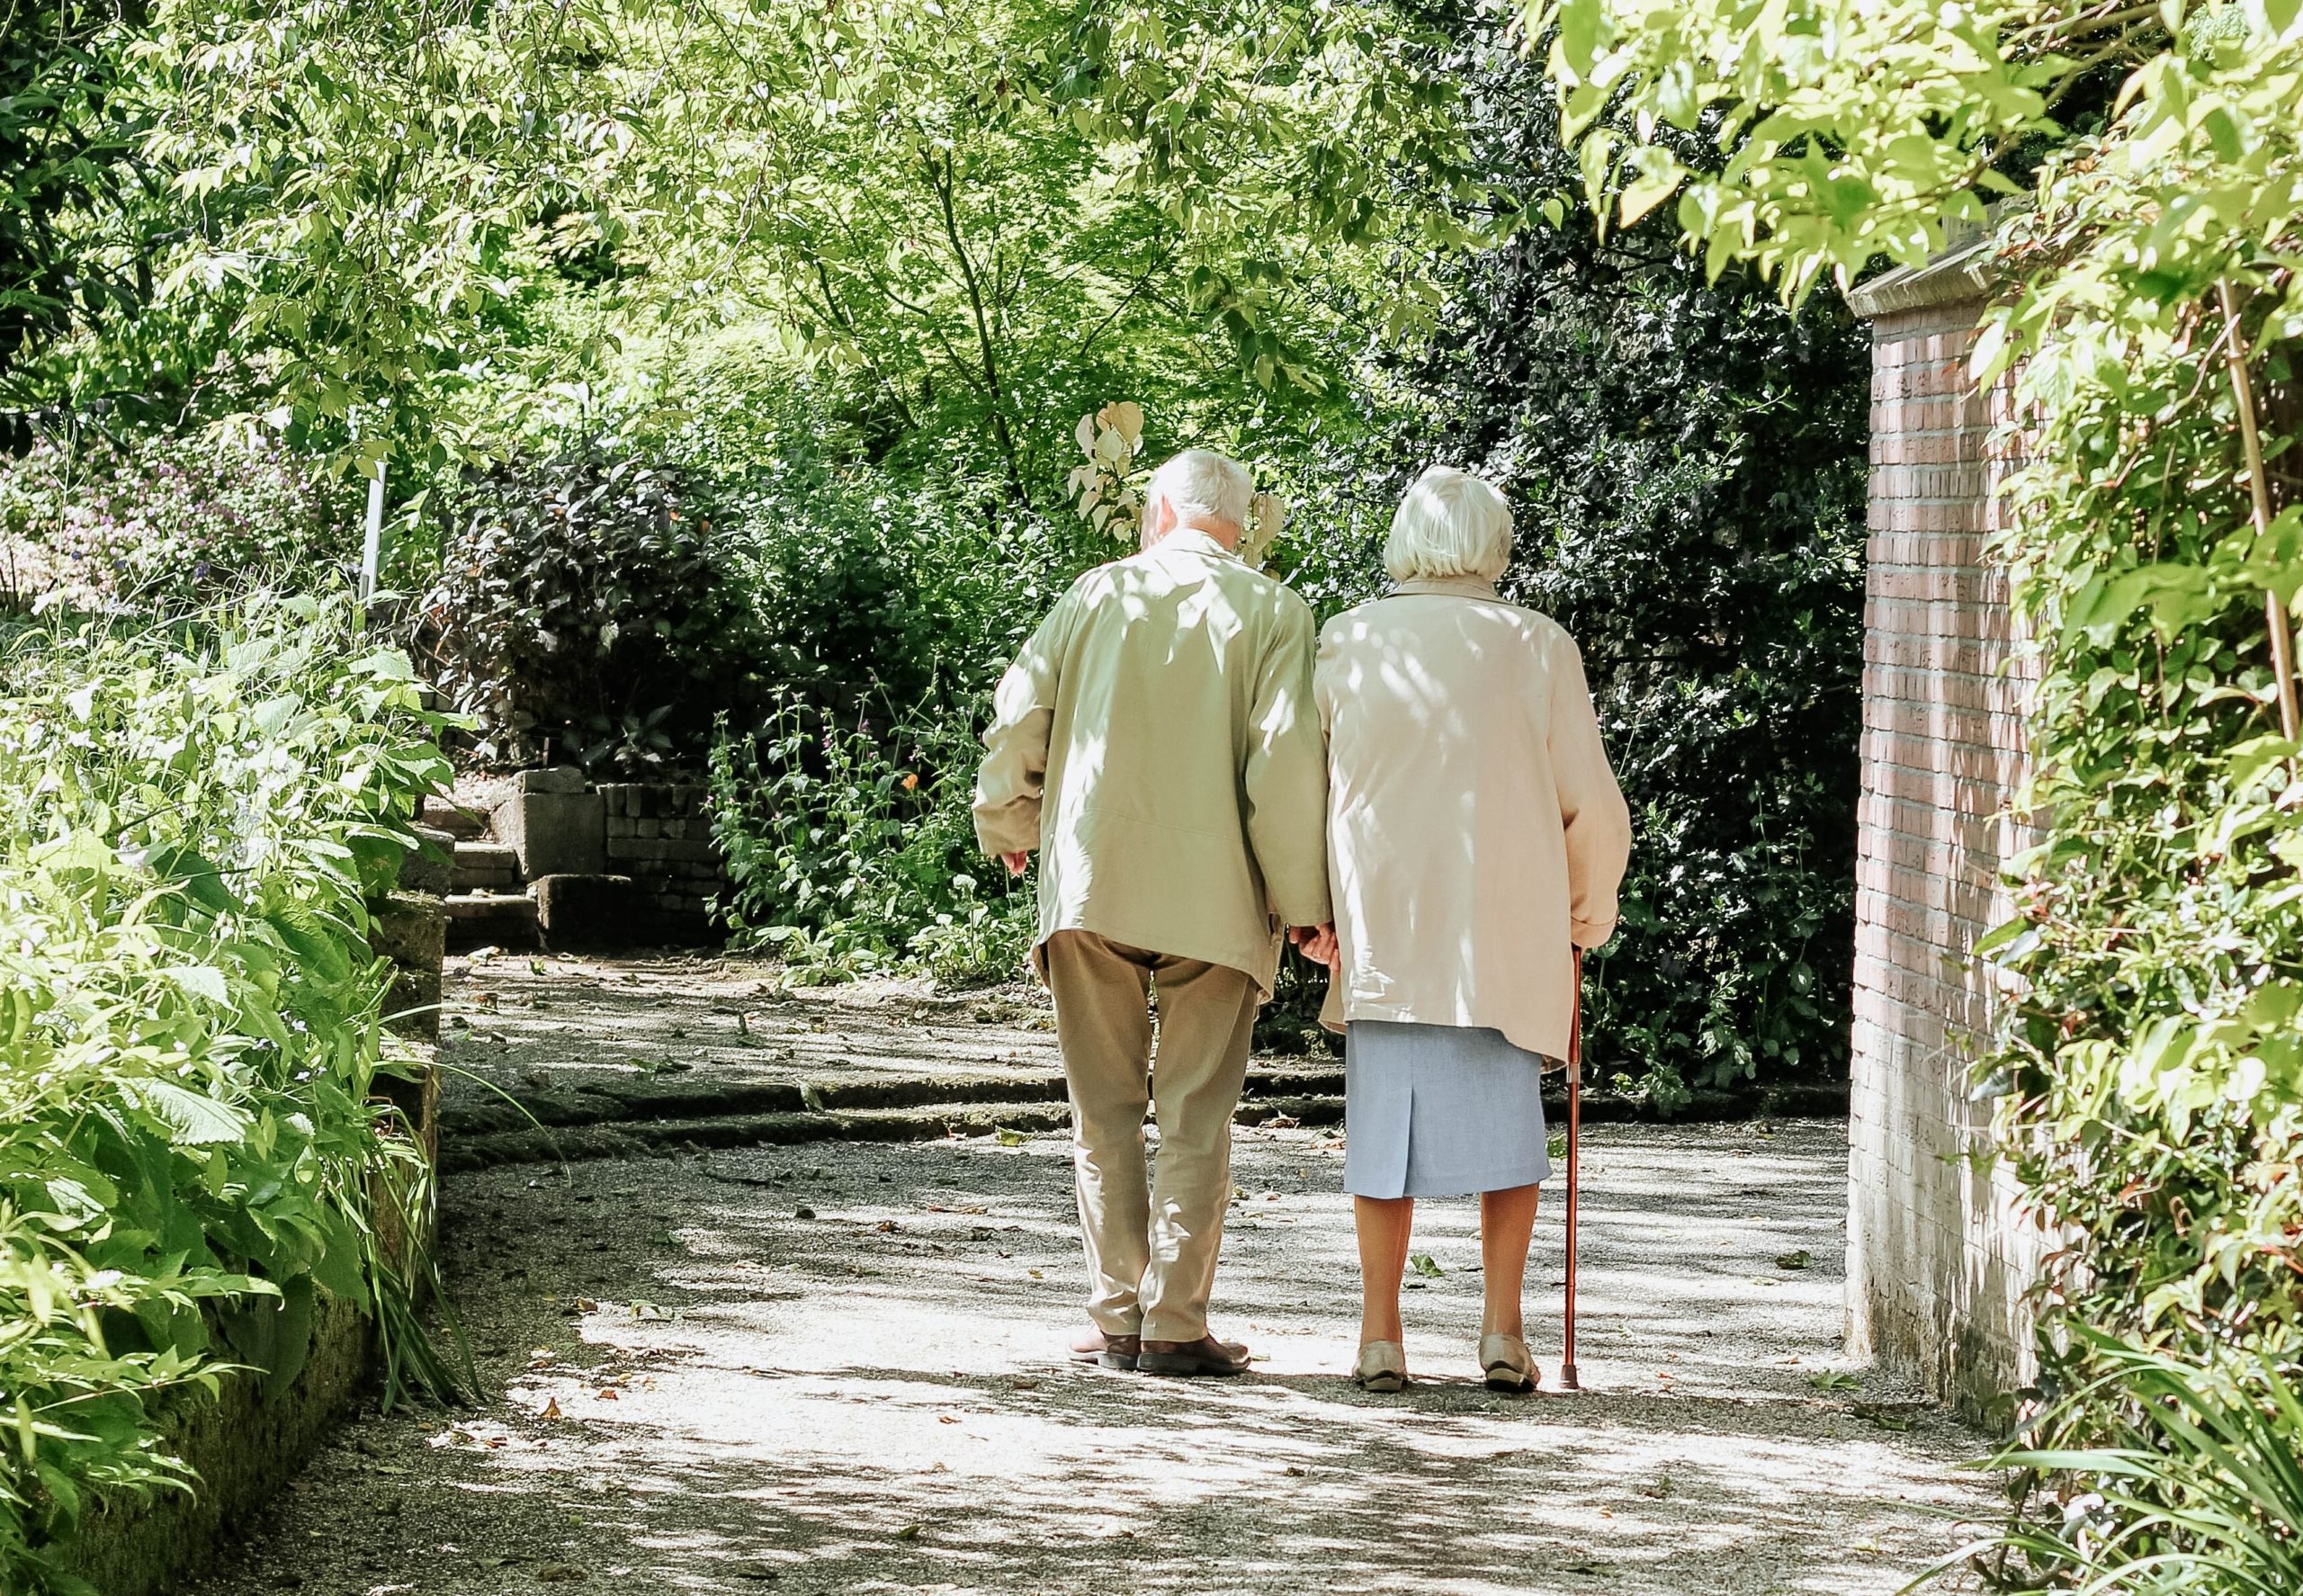 Elder Care Resources through Bright Horizons